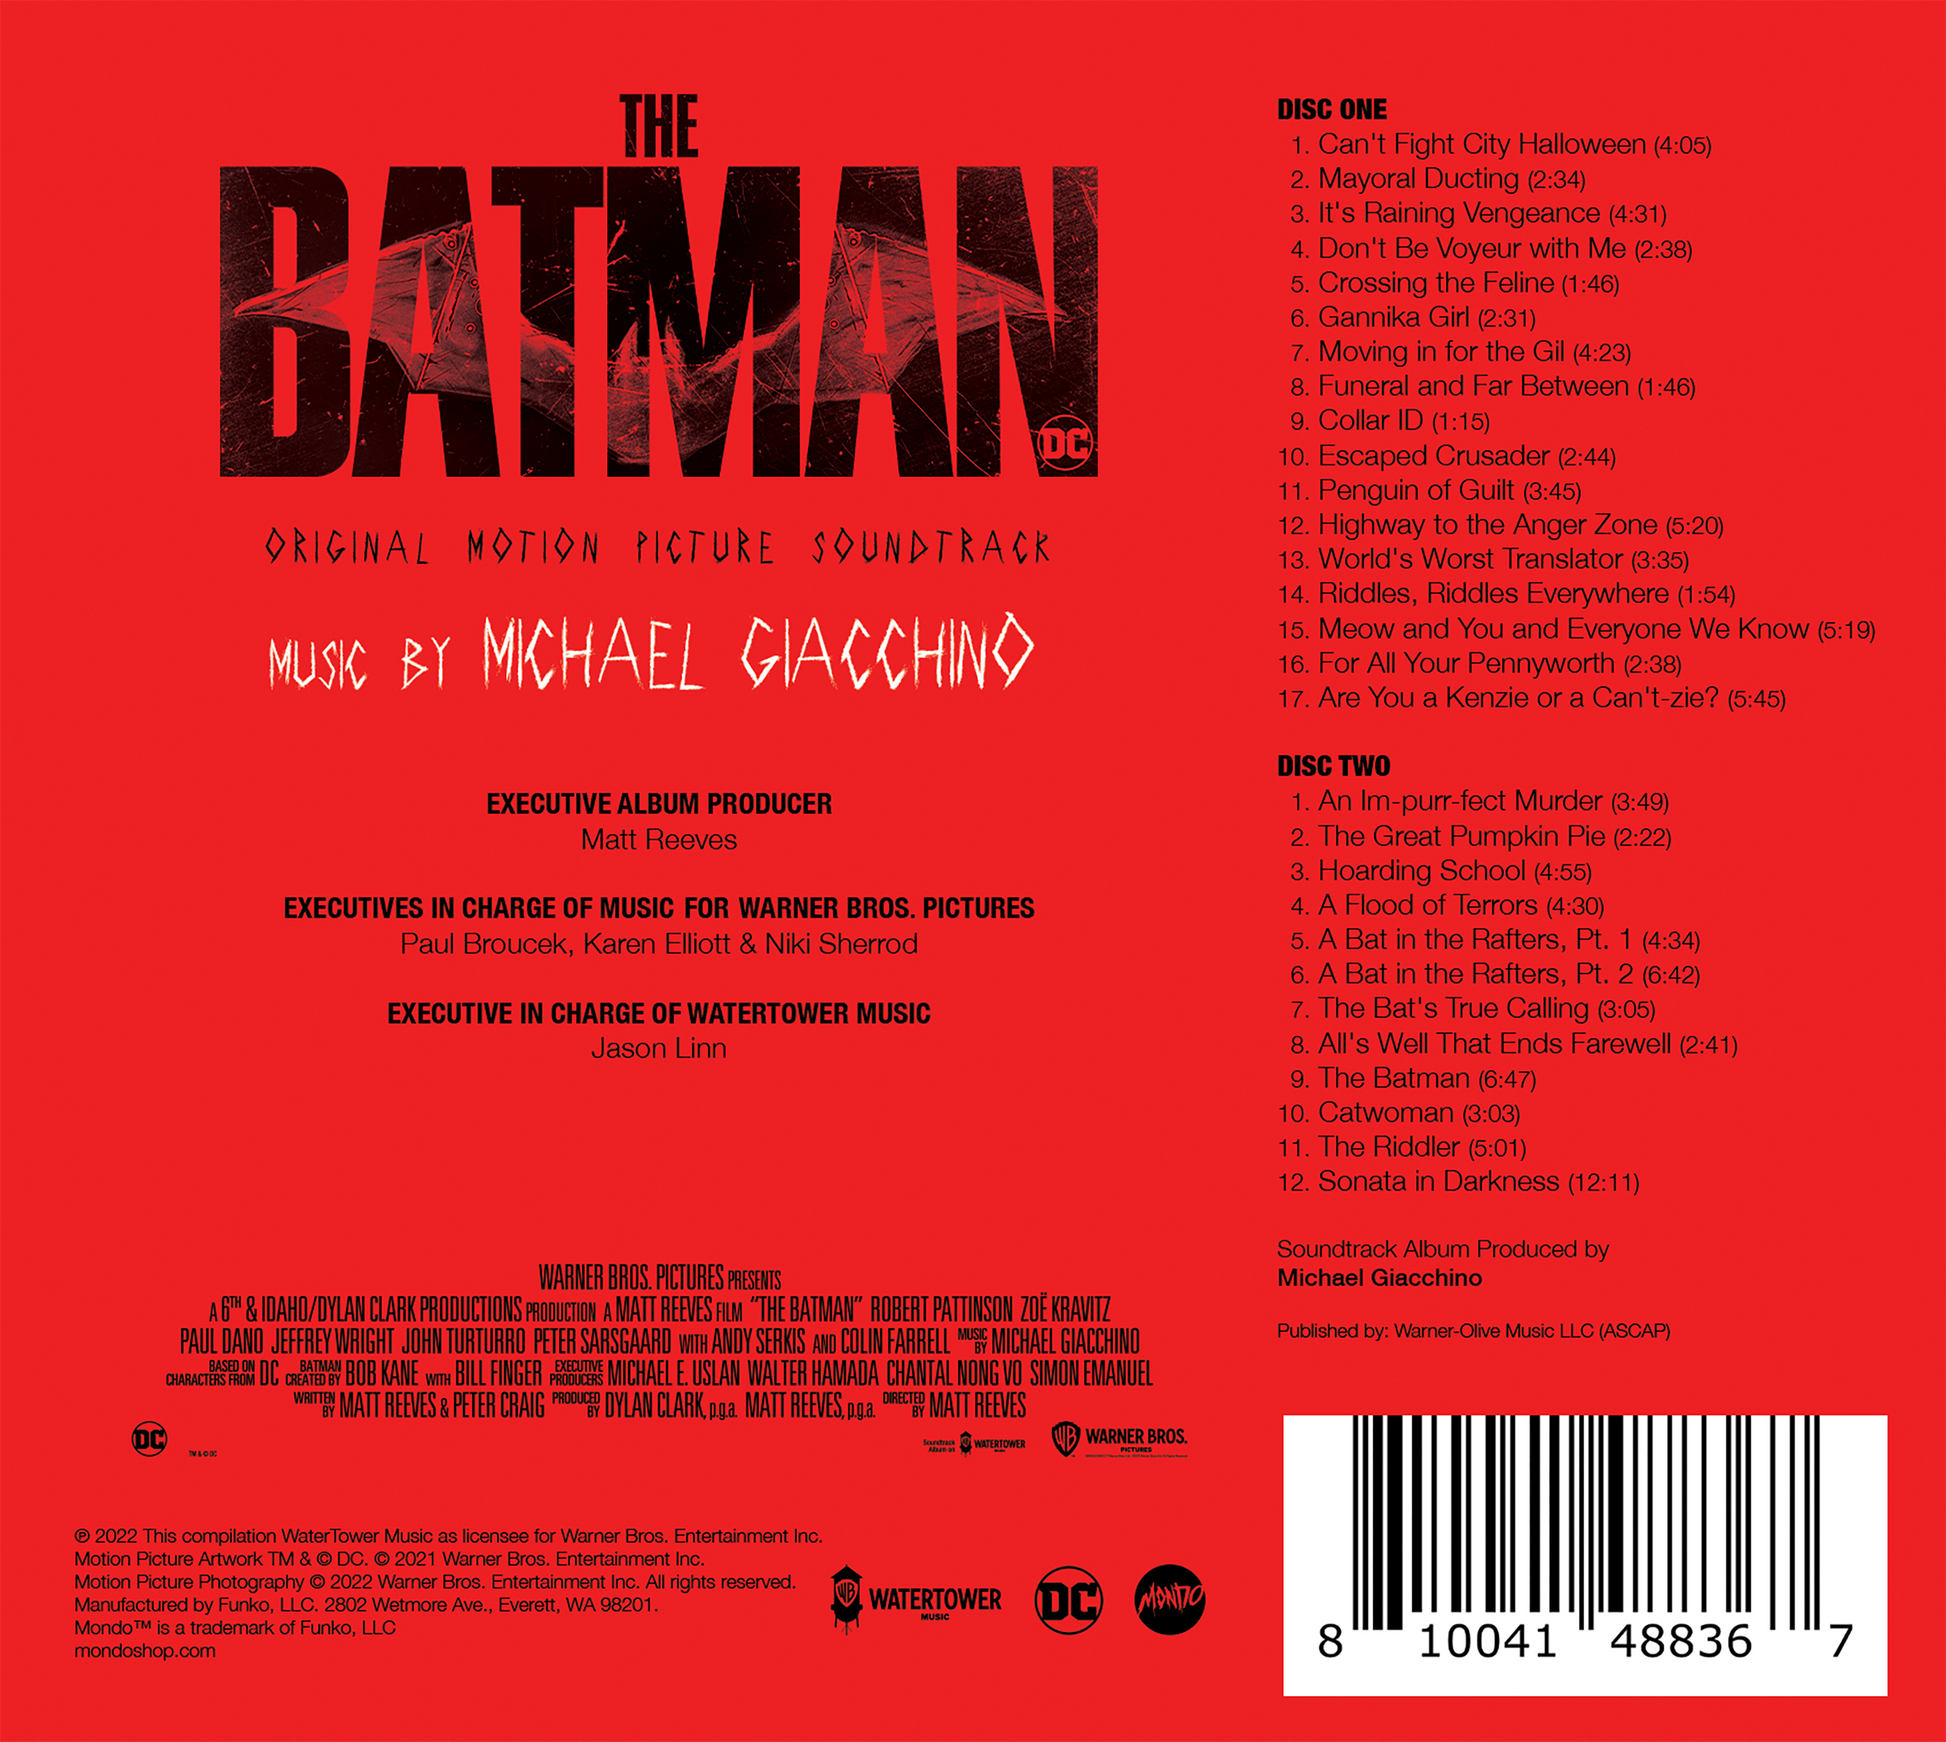 MOND-262 - Michael Giacchino - The Batman (Original Motion Picture Soundtrack)